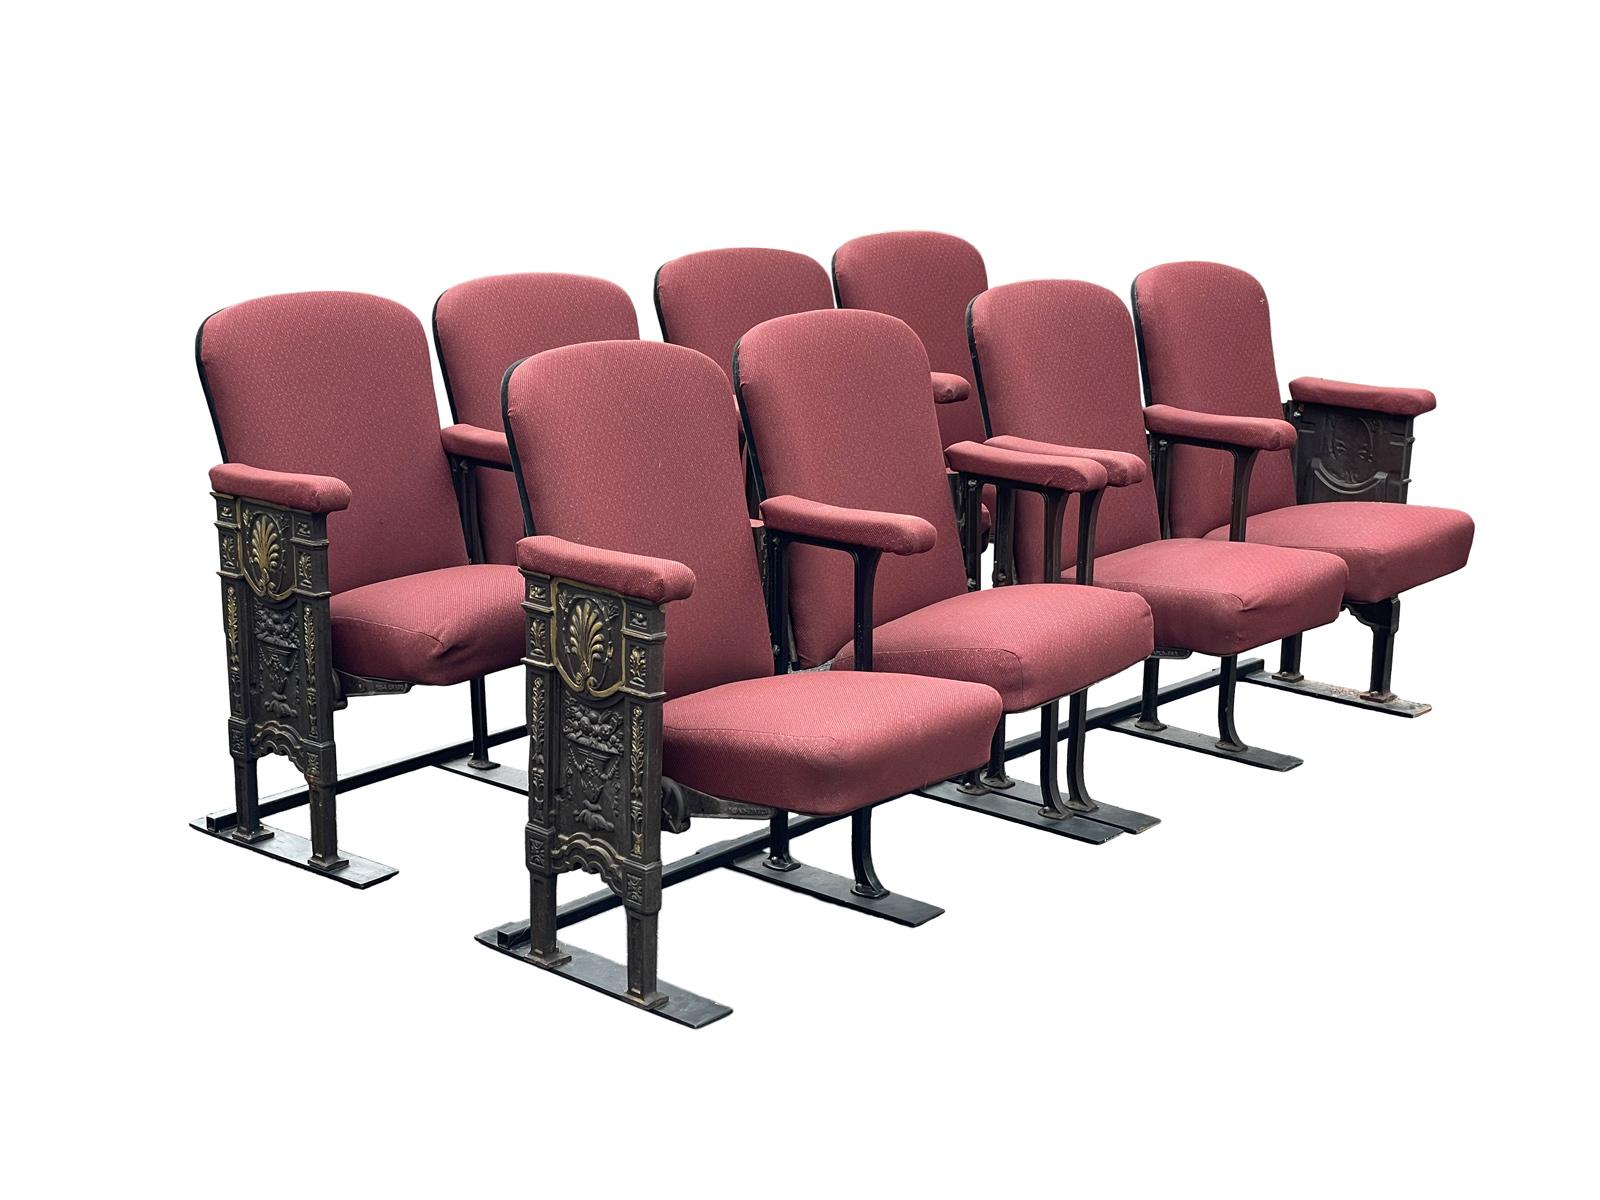 Original Studio54 Newyork Art Deco Theater Seat Bench Chairs For Sale 2